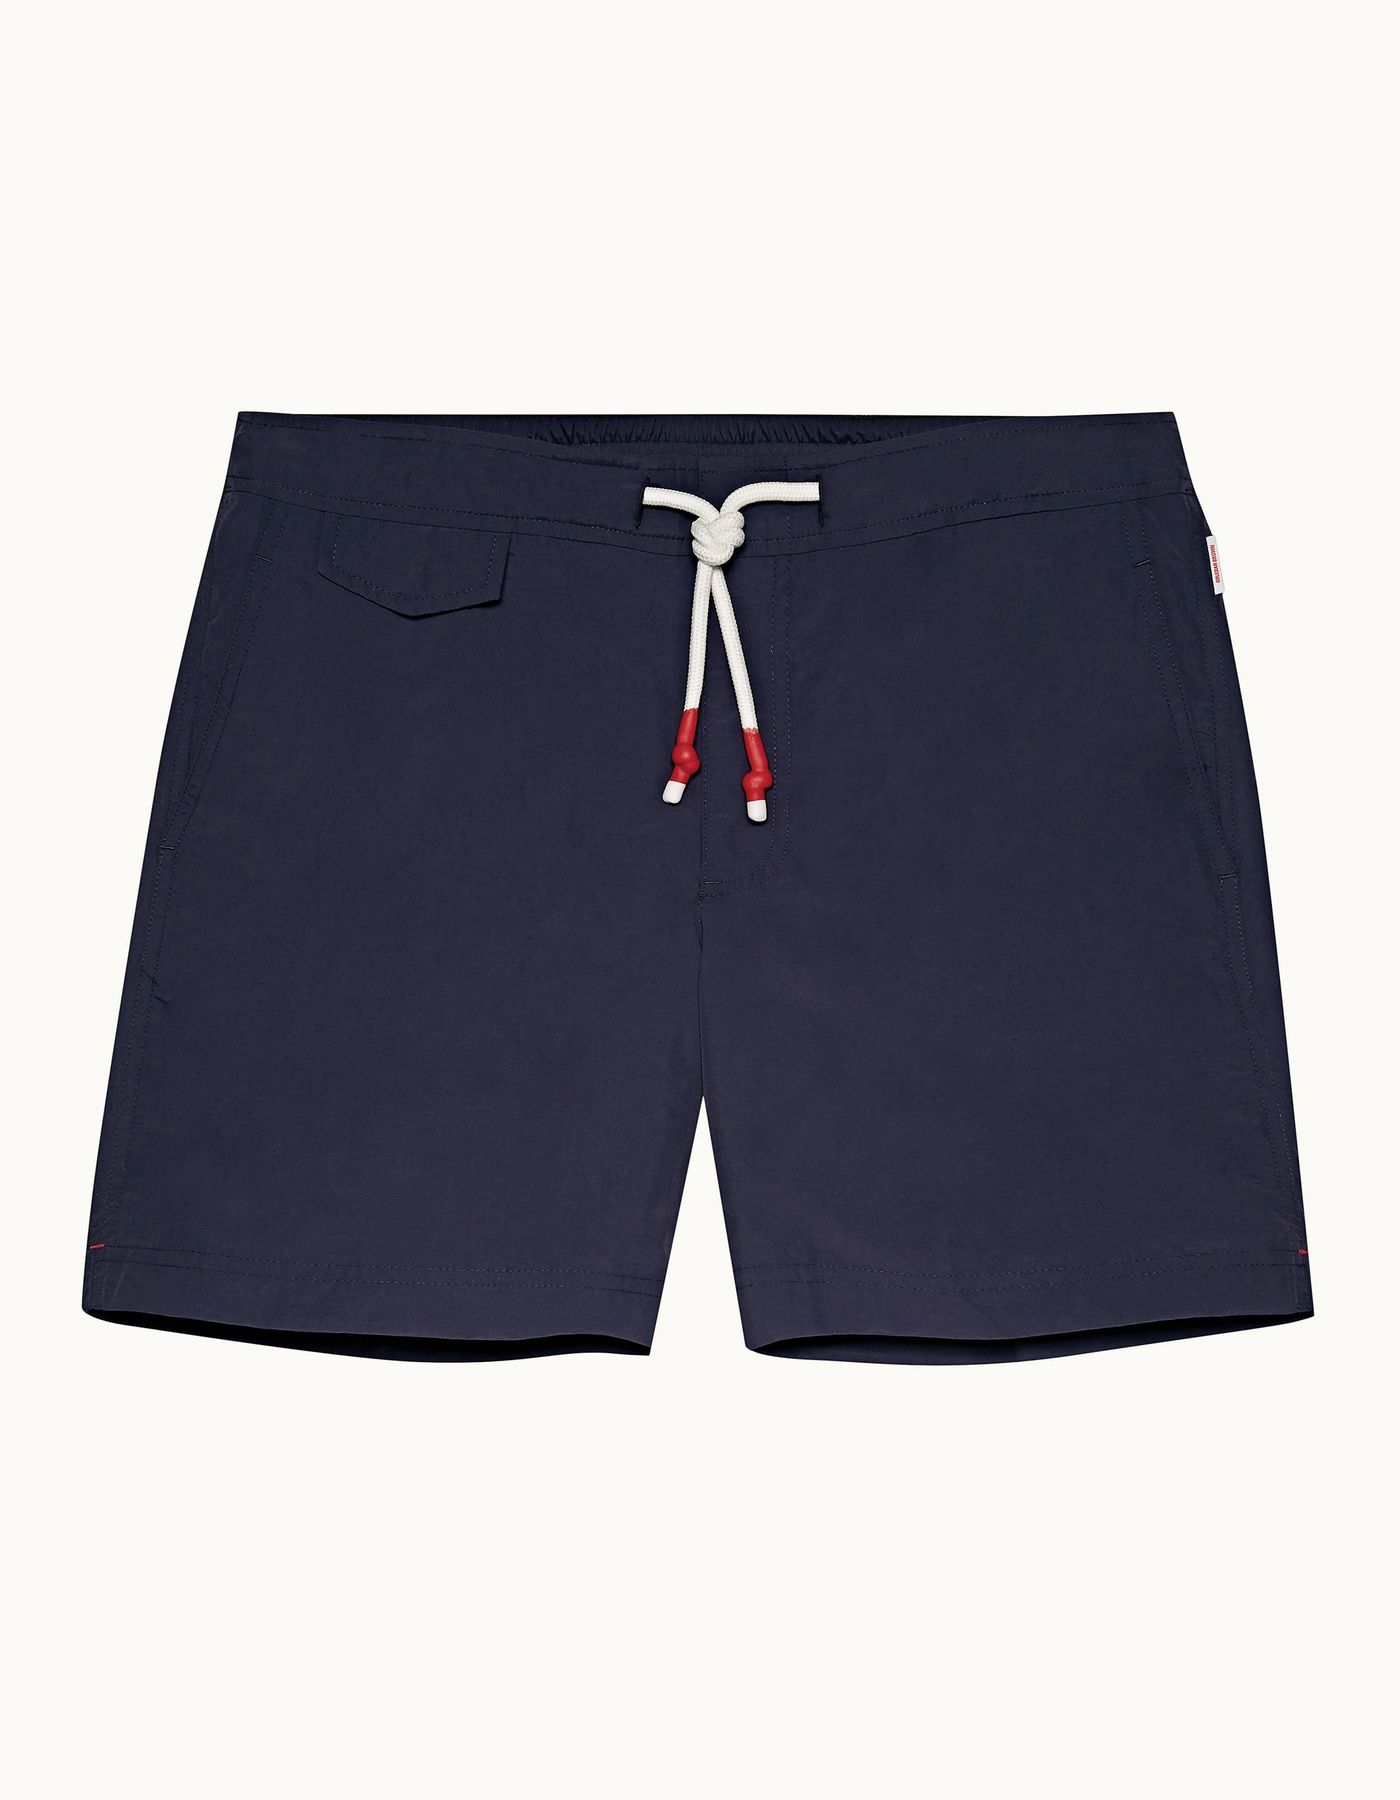 Standard - Mens Navy Mid-Length Swim Shorts